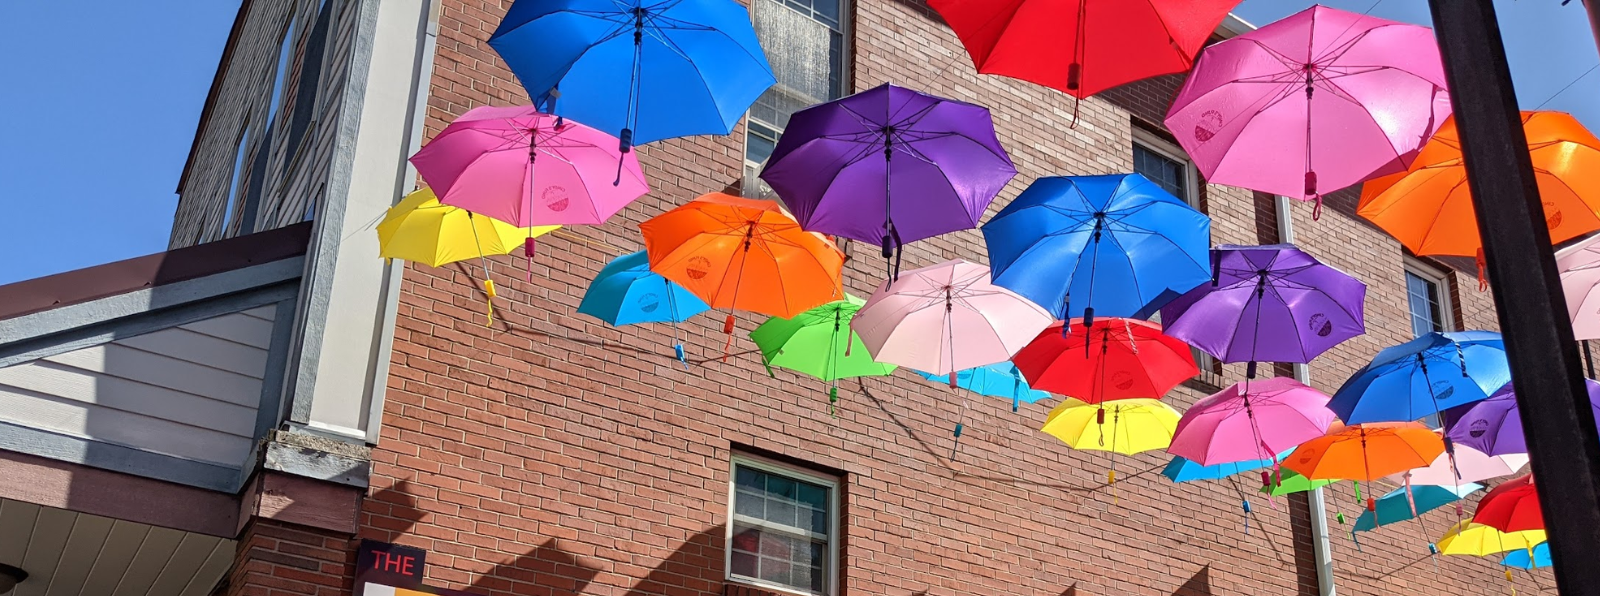 Umbrellas hang next to a brick wall.